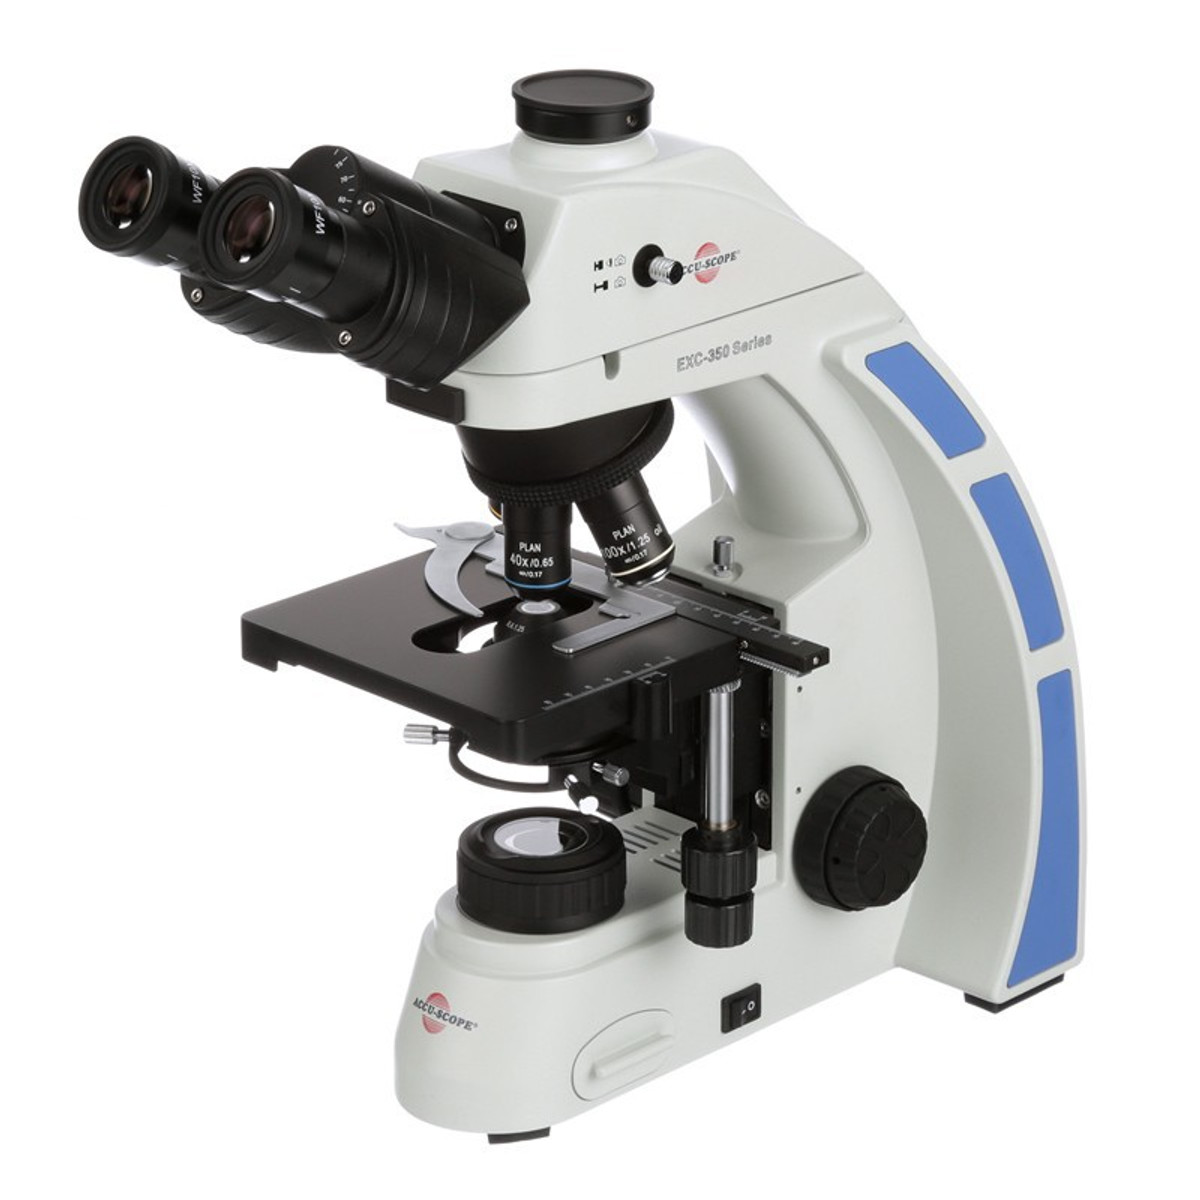 ACCU-SCOPE EXC-350 Trinocular Biological Microscope with Plan